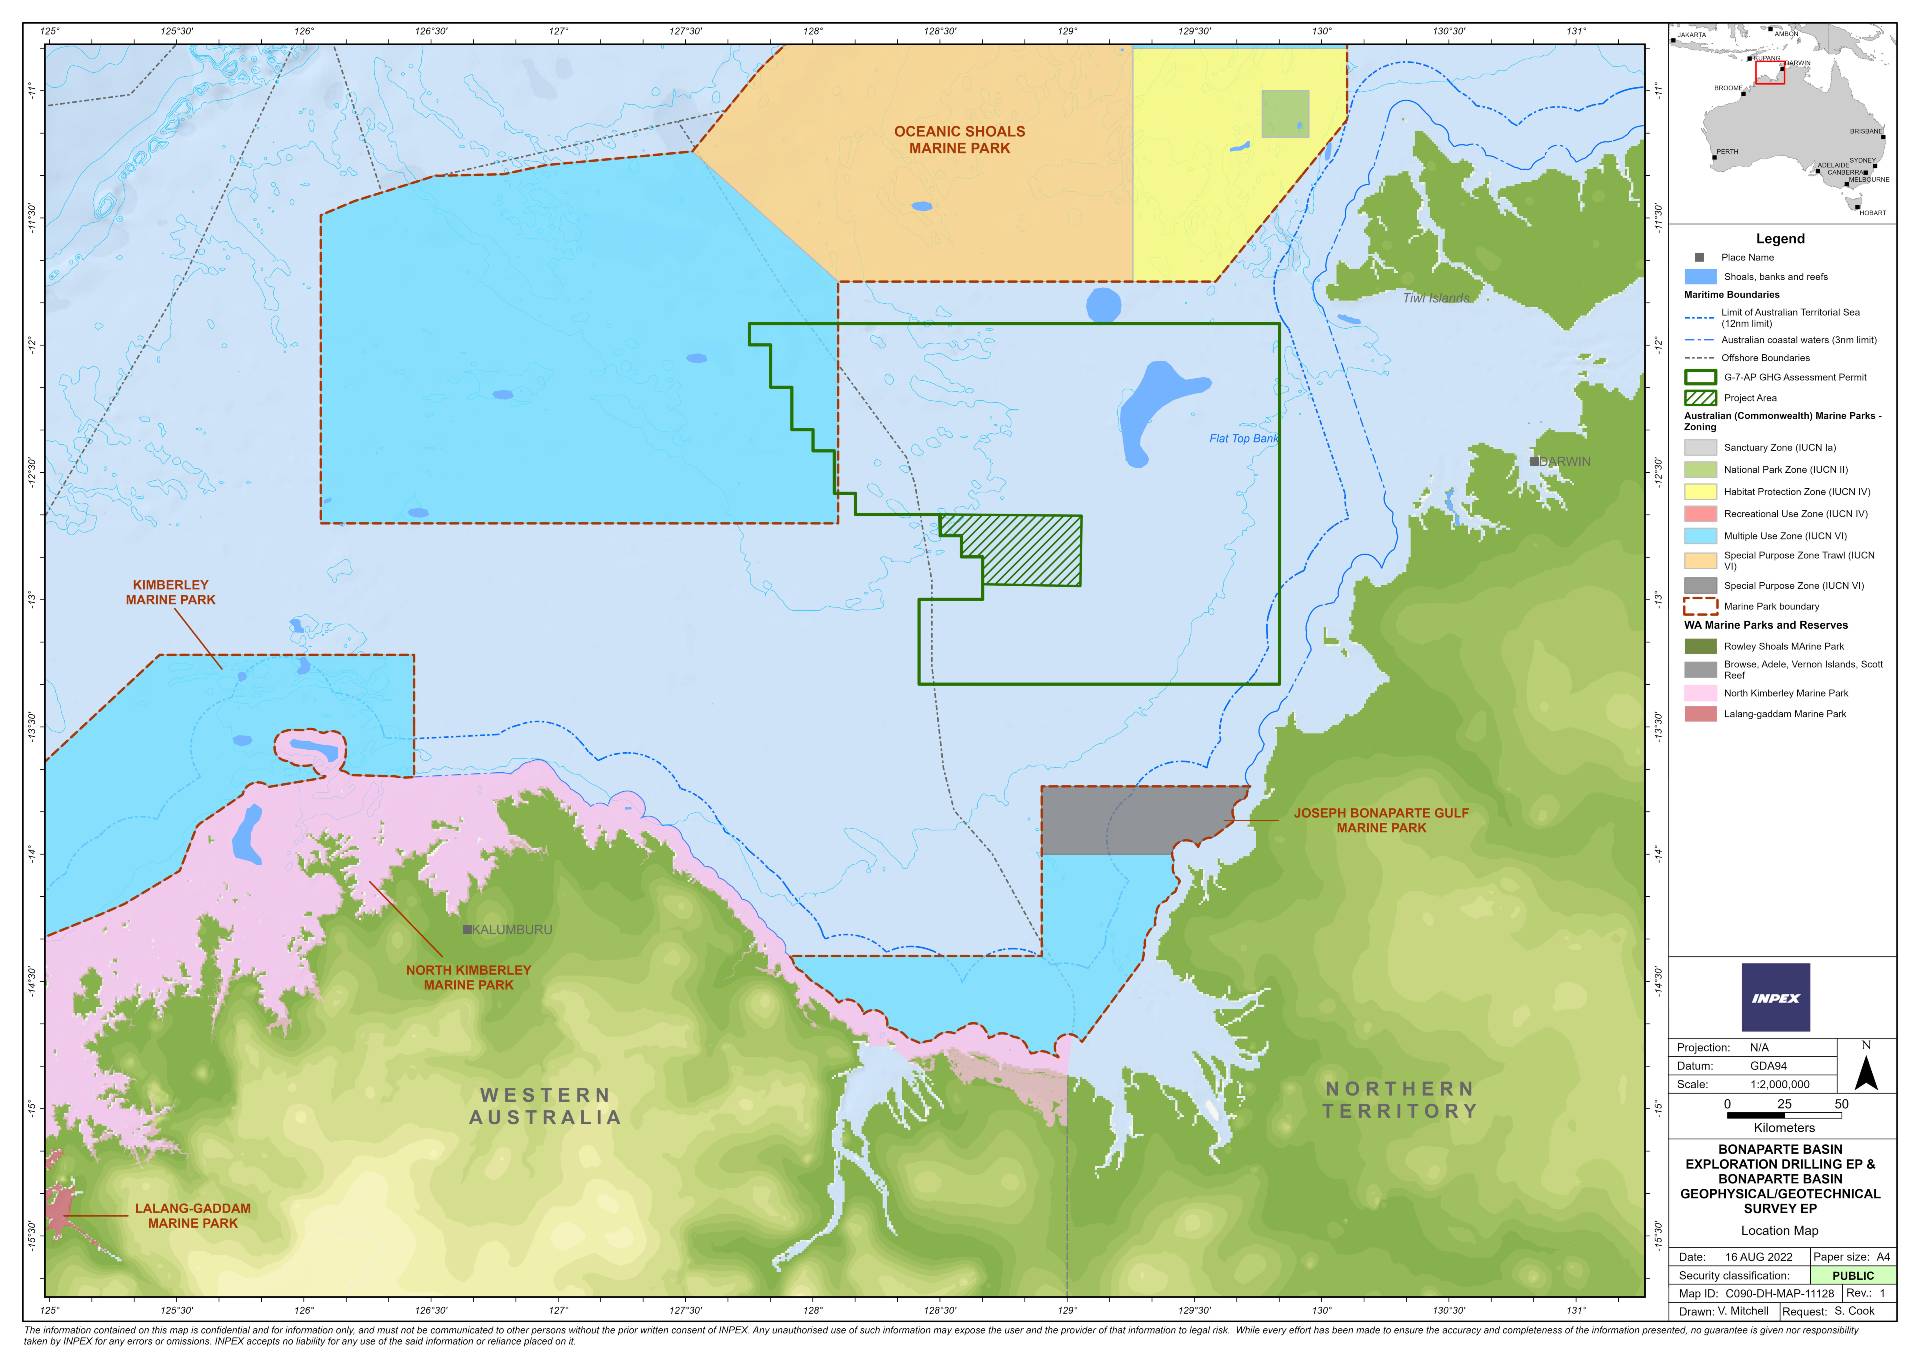 Location map - Activity: Bonaparte Basin Geophysical/Geotechnical Survey (refer to description)